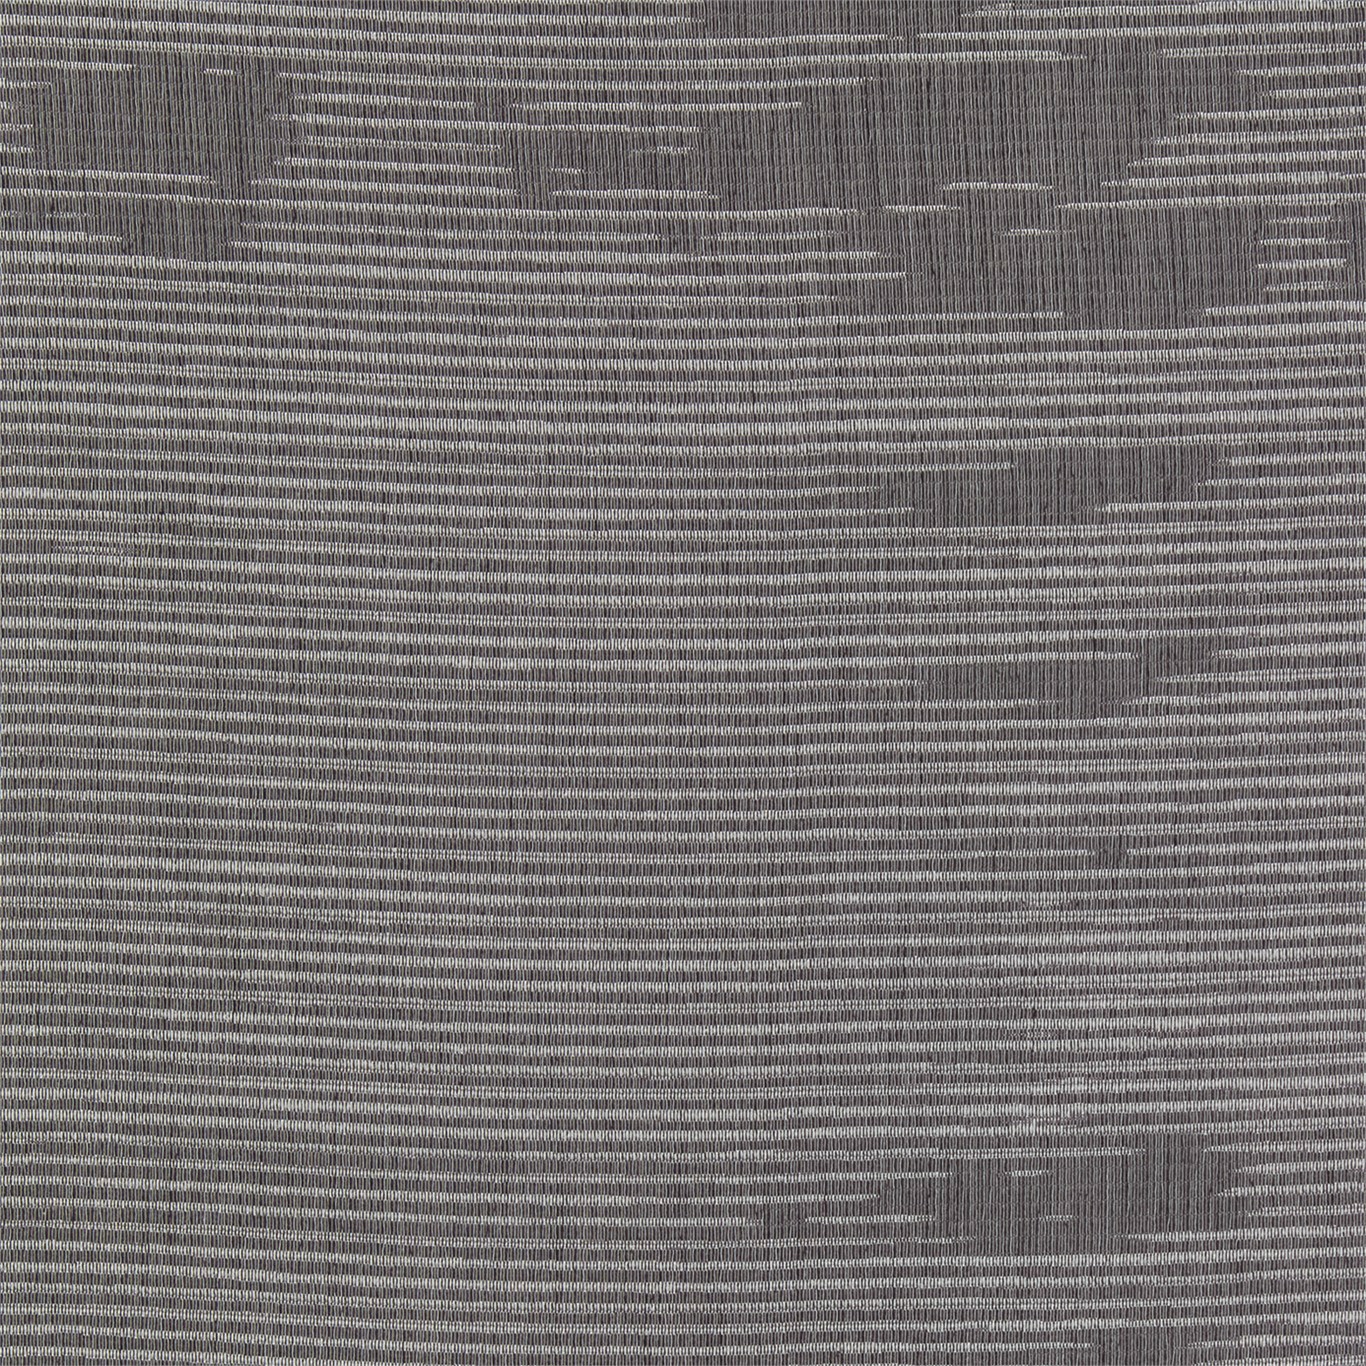 Anthology Senkei Steel Fabric by HAR